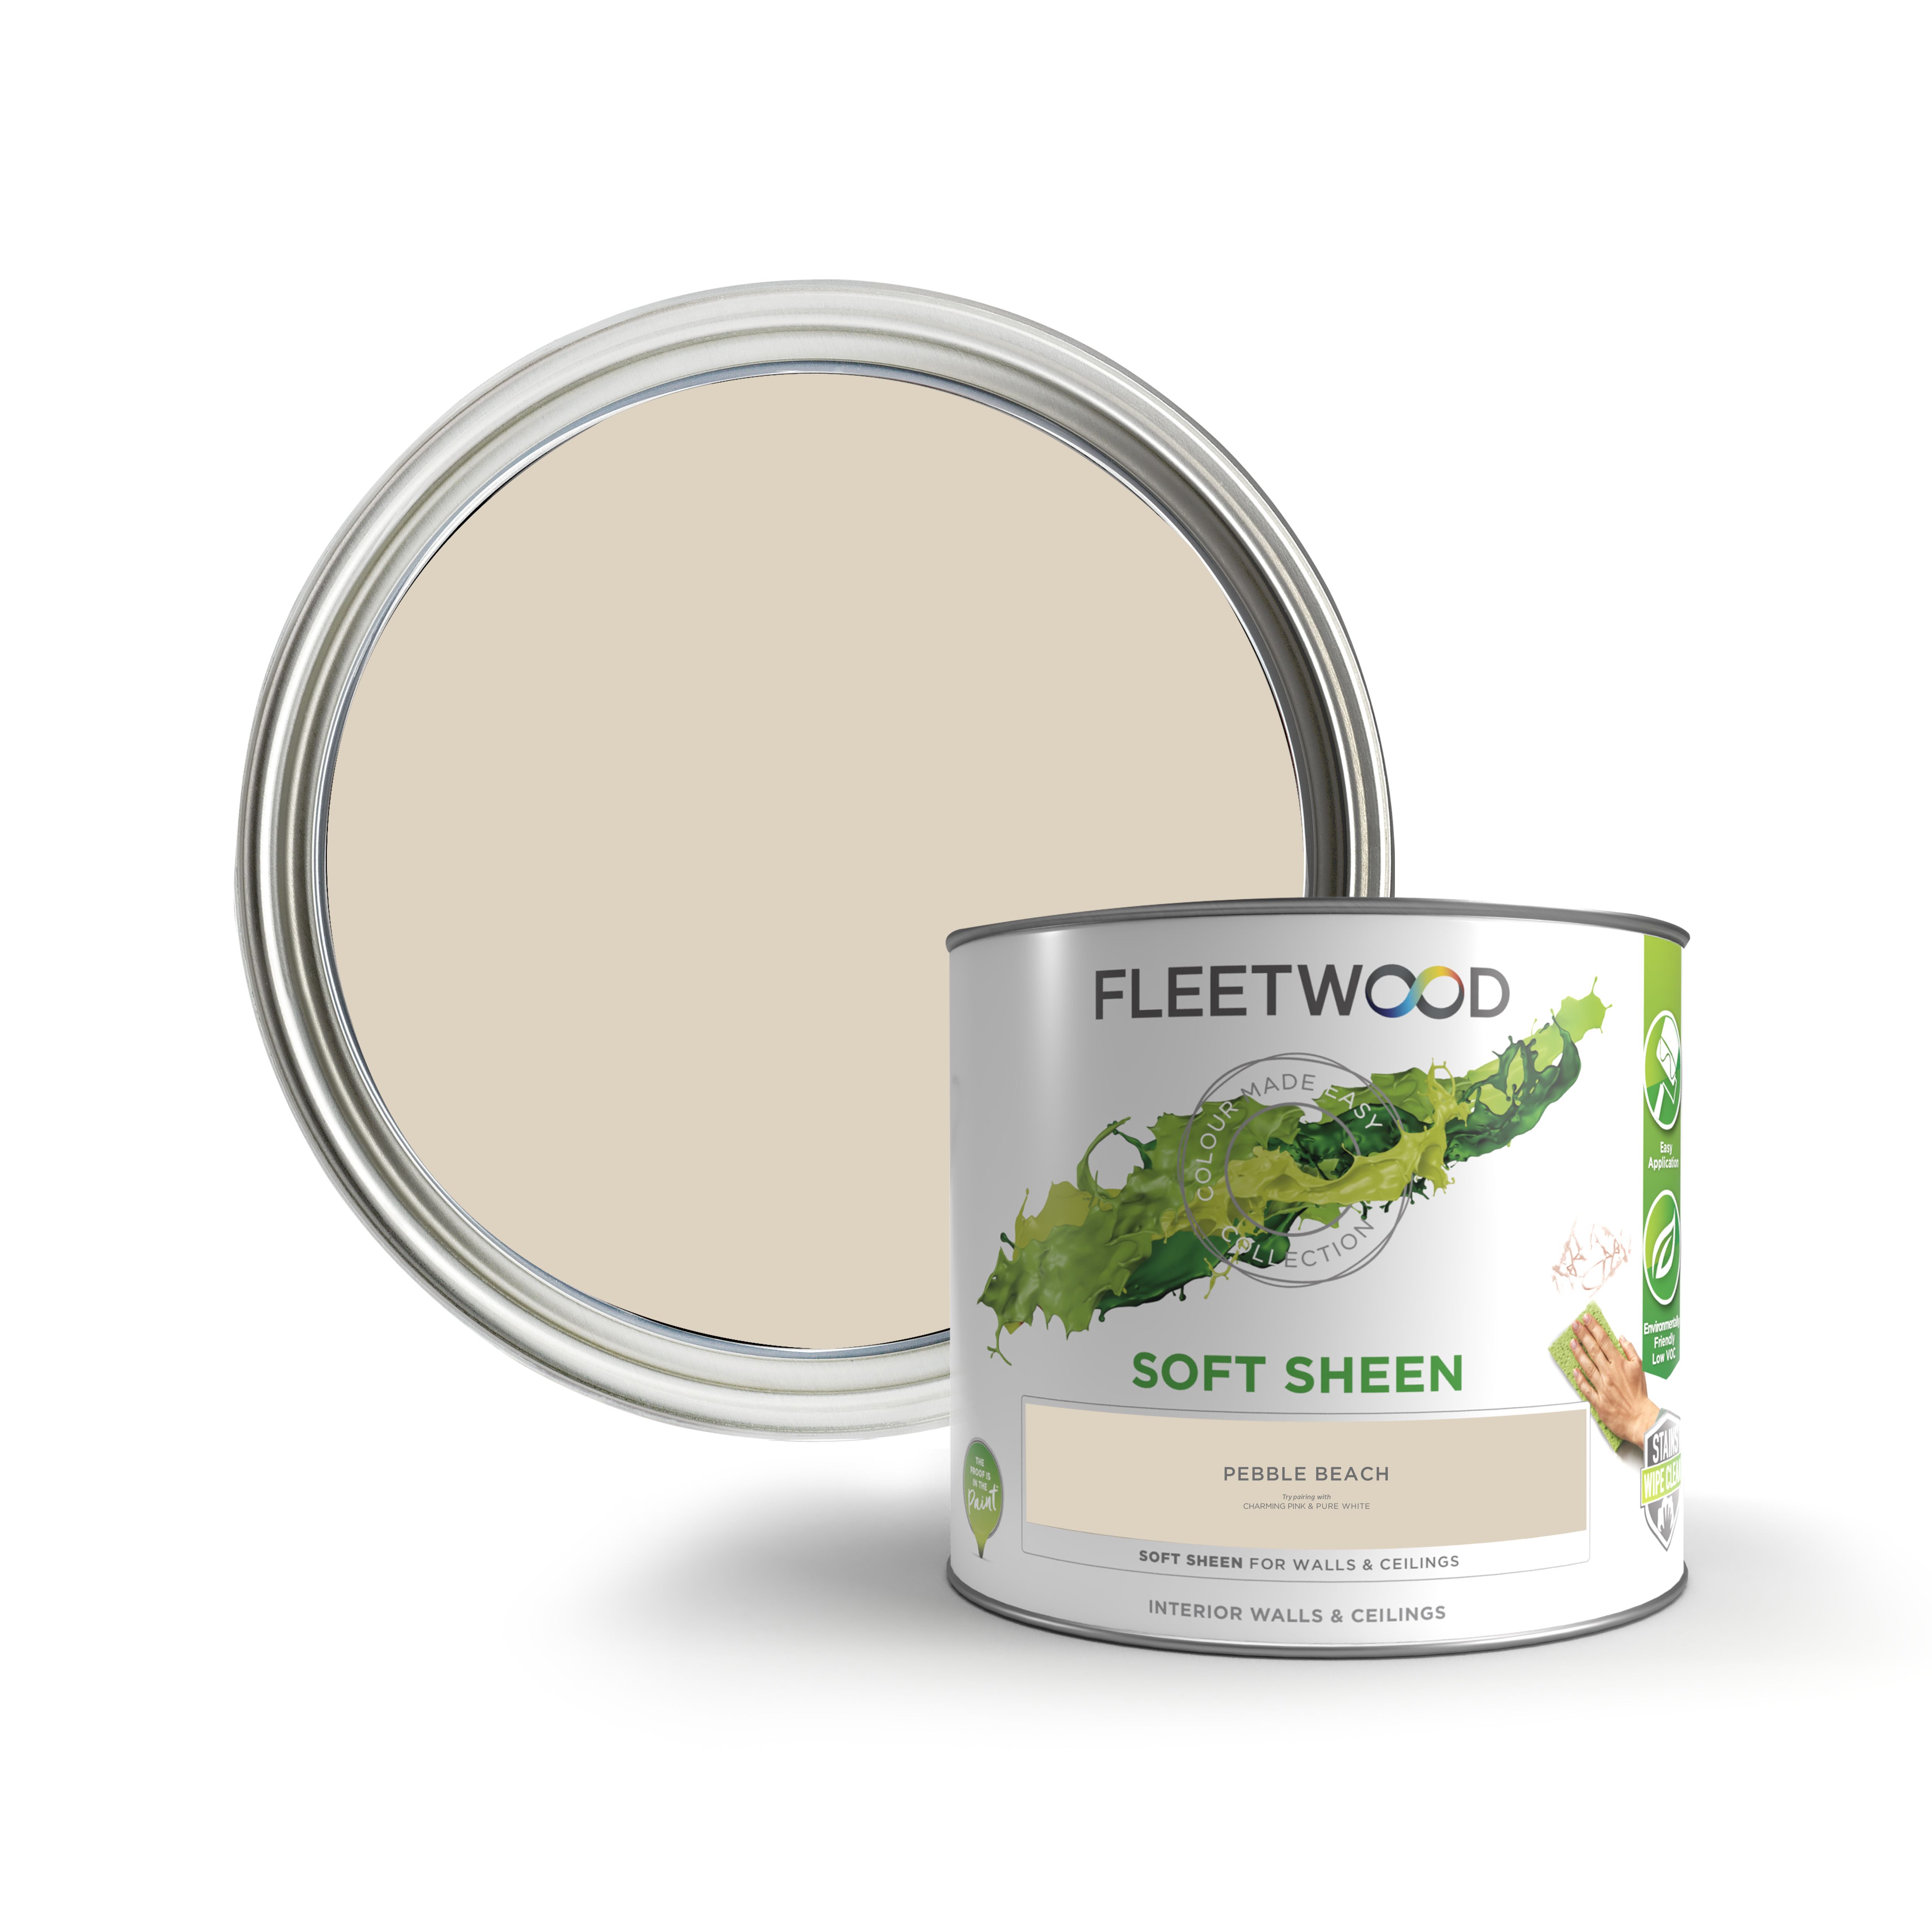 Fleetwood Pebble Beach Soft sheen Emulsion paint, 2.5L